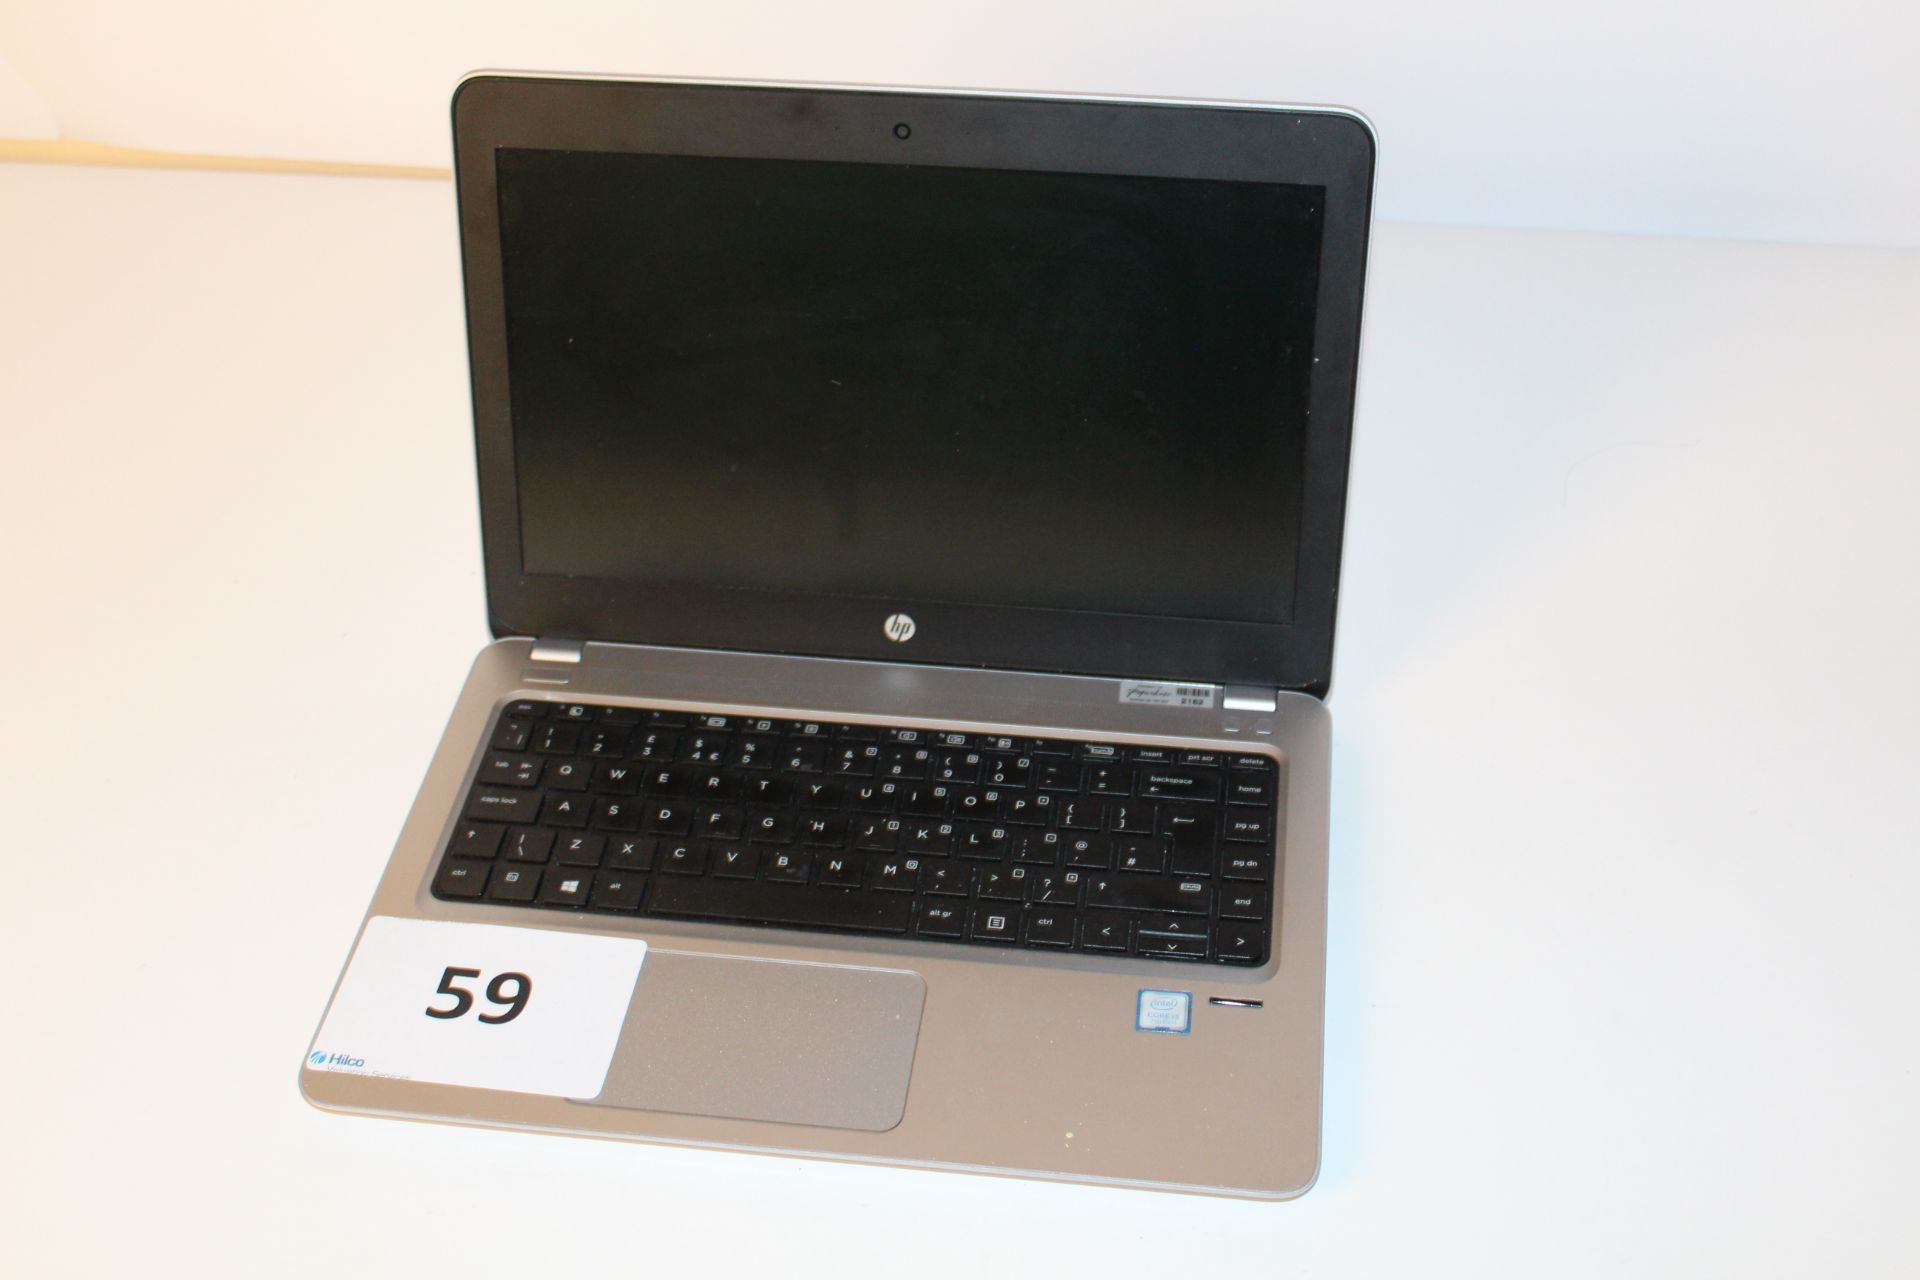 HP ProBook 430 G4 Core i5 Laptop Computer, S/N 5CD6505CJC. No charger